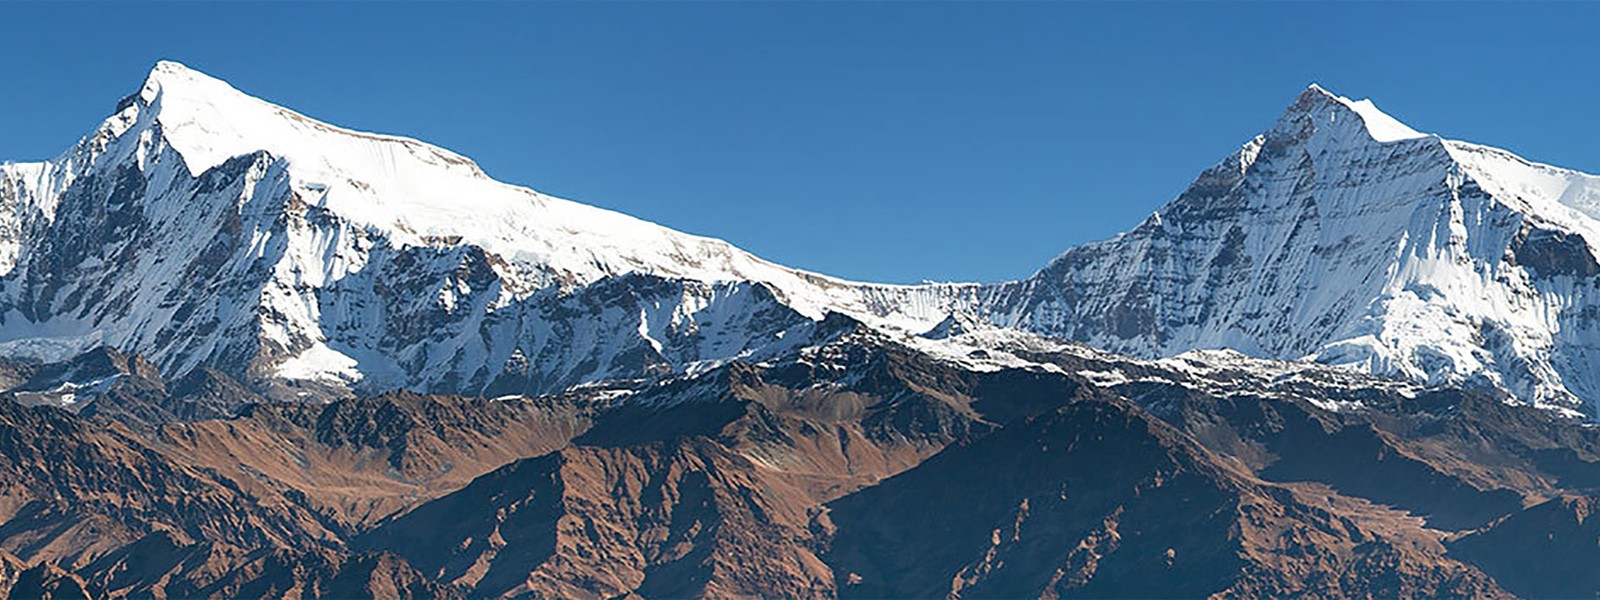 Mt. Churen HImal Expedition